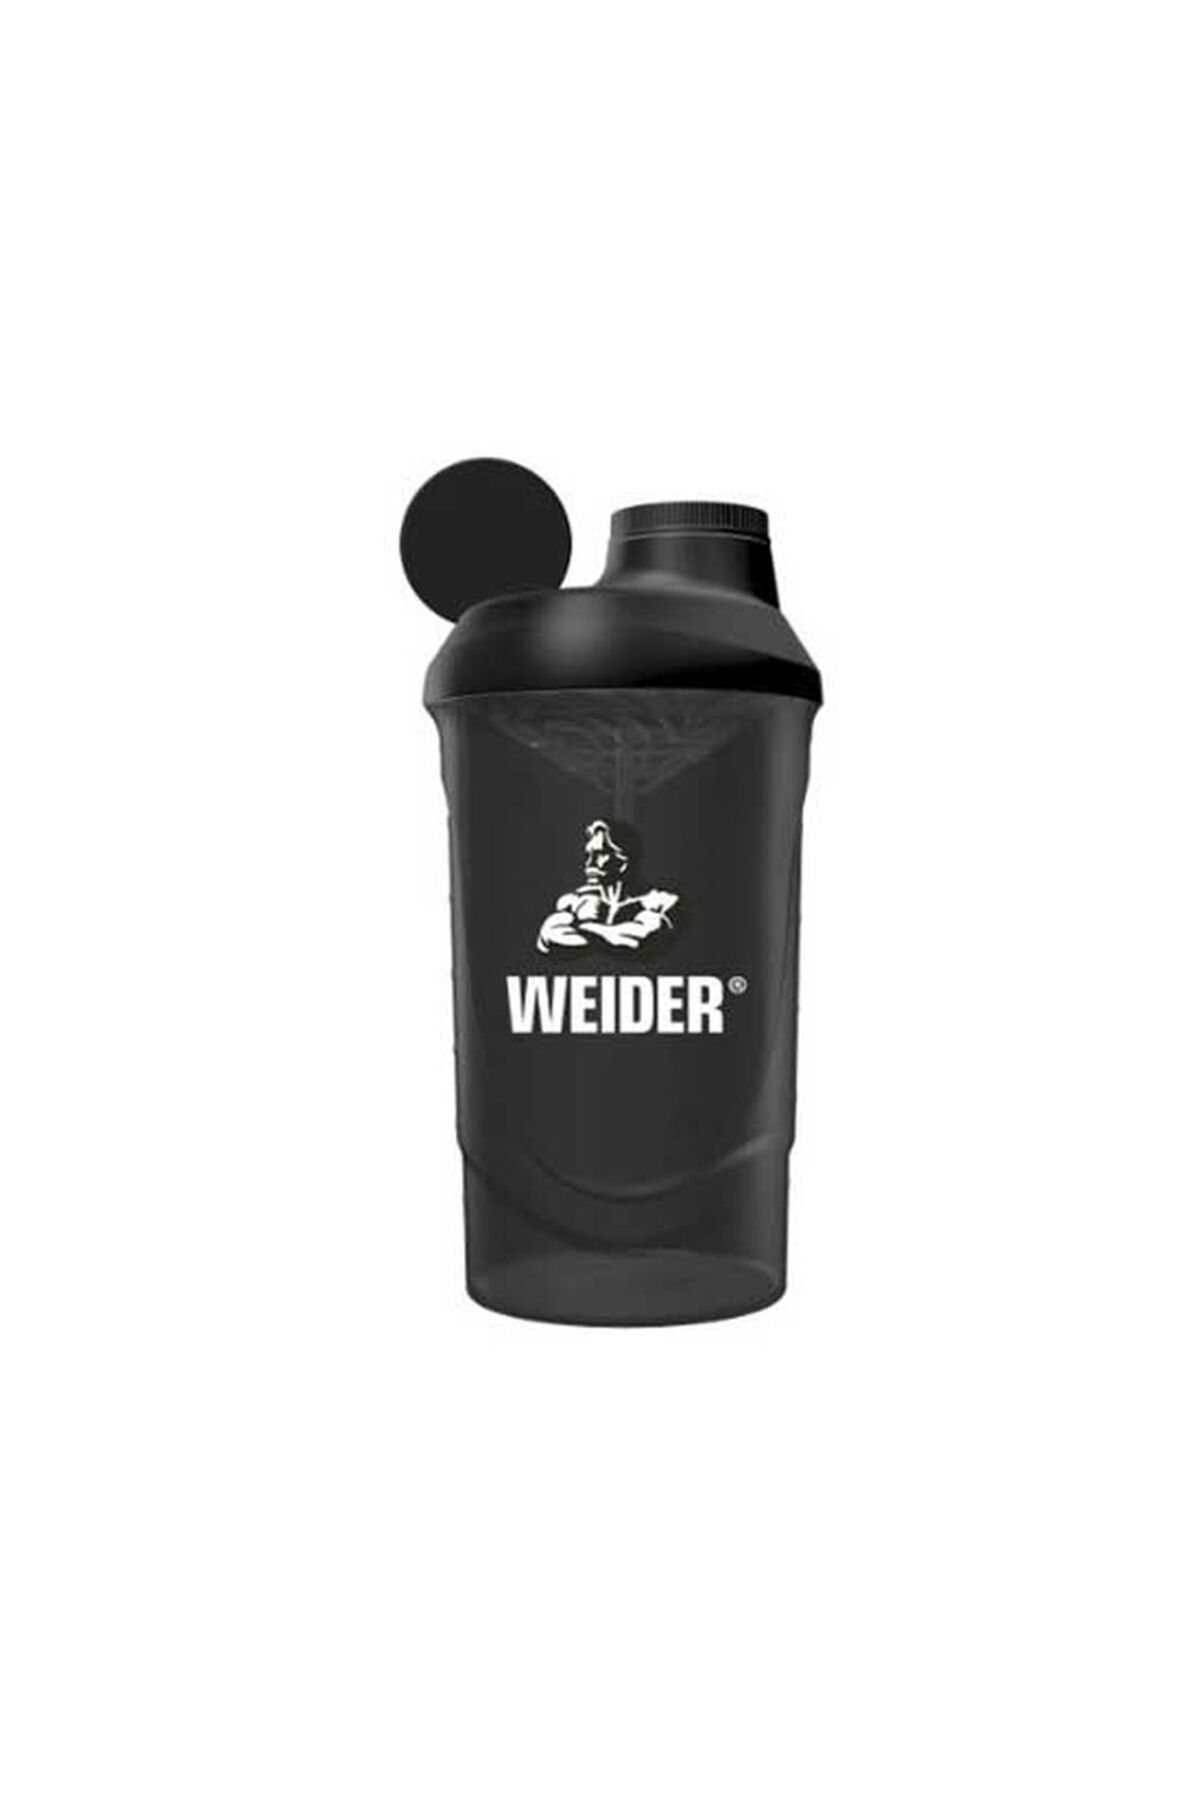 Weider Shaker Black – 600 ml